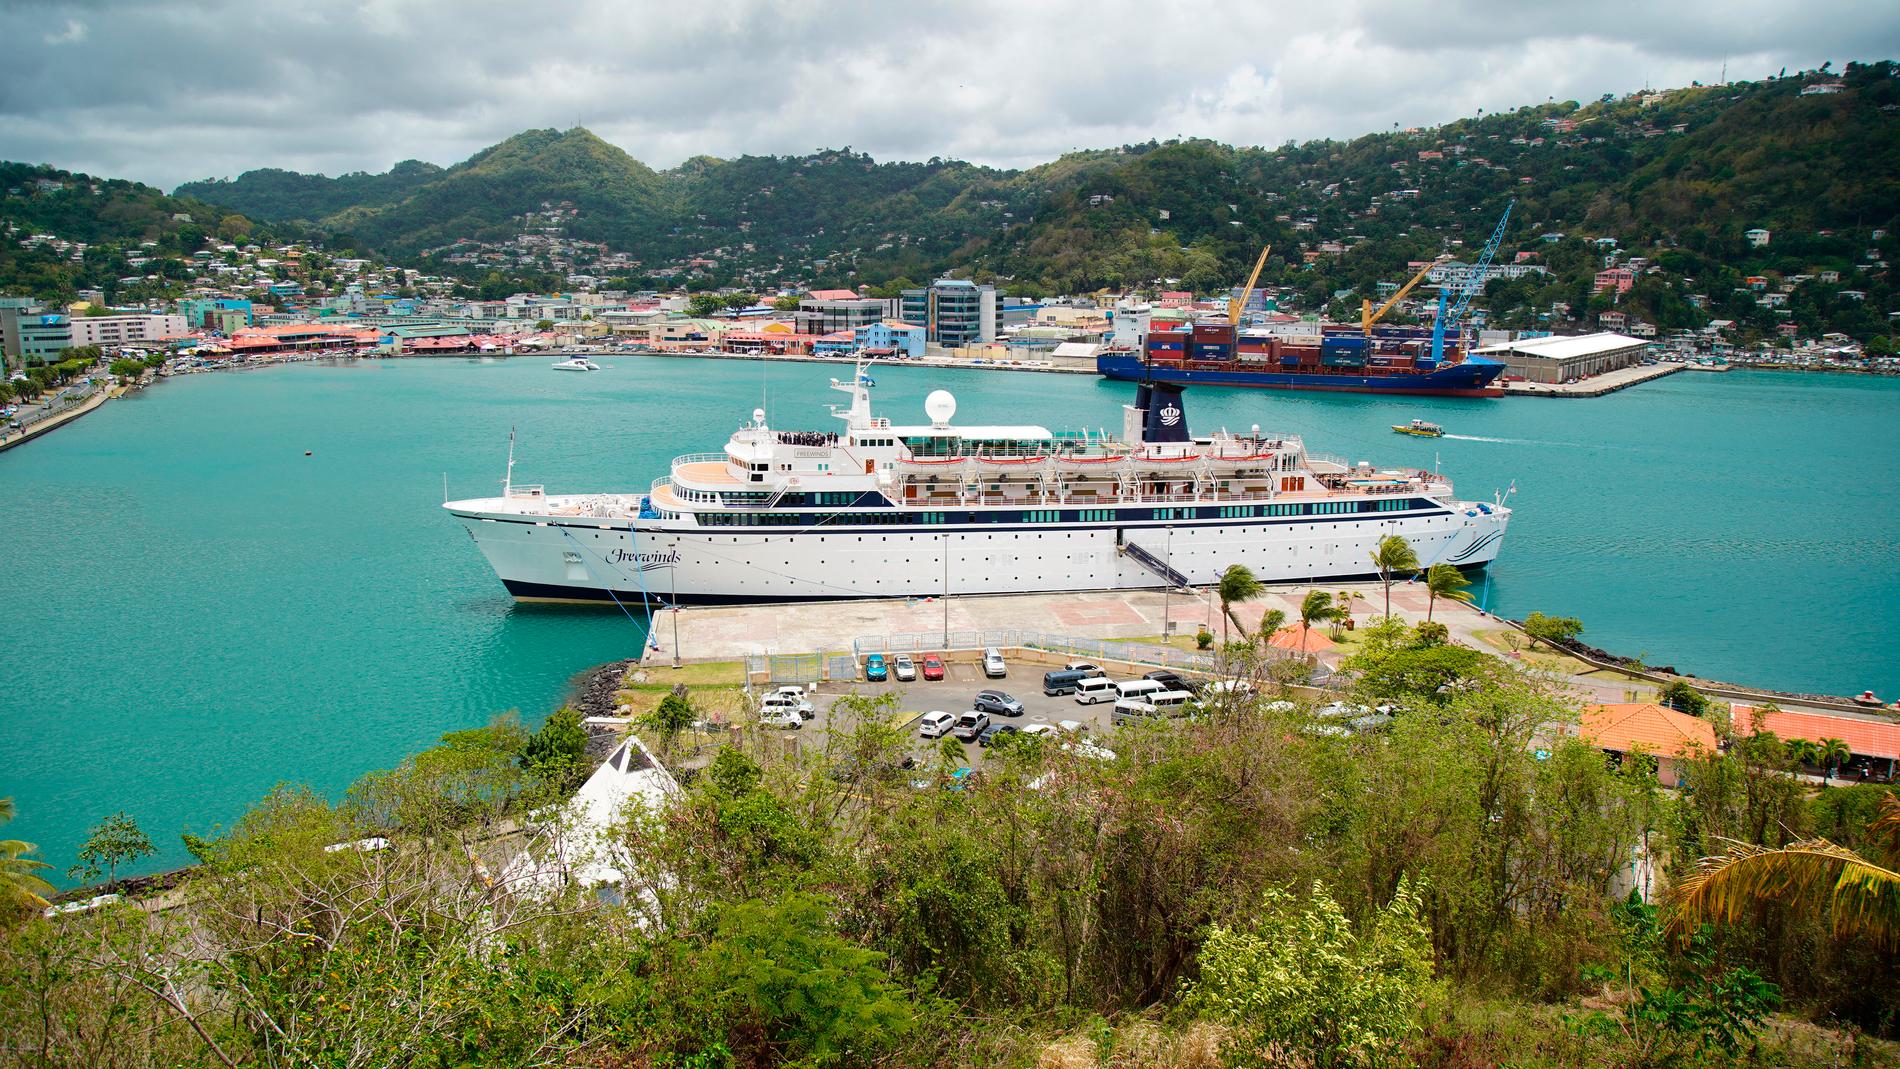 Kryssningsfartyget Freewinds i hamn i Castries, huvudstaden i Saint Lucia.